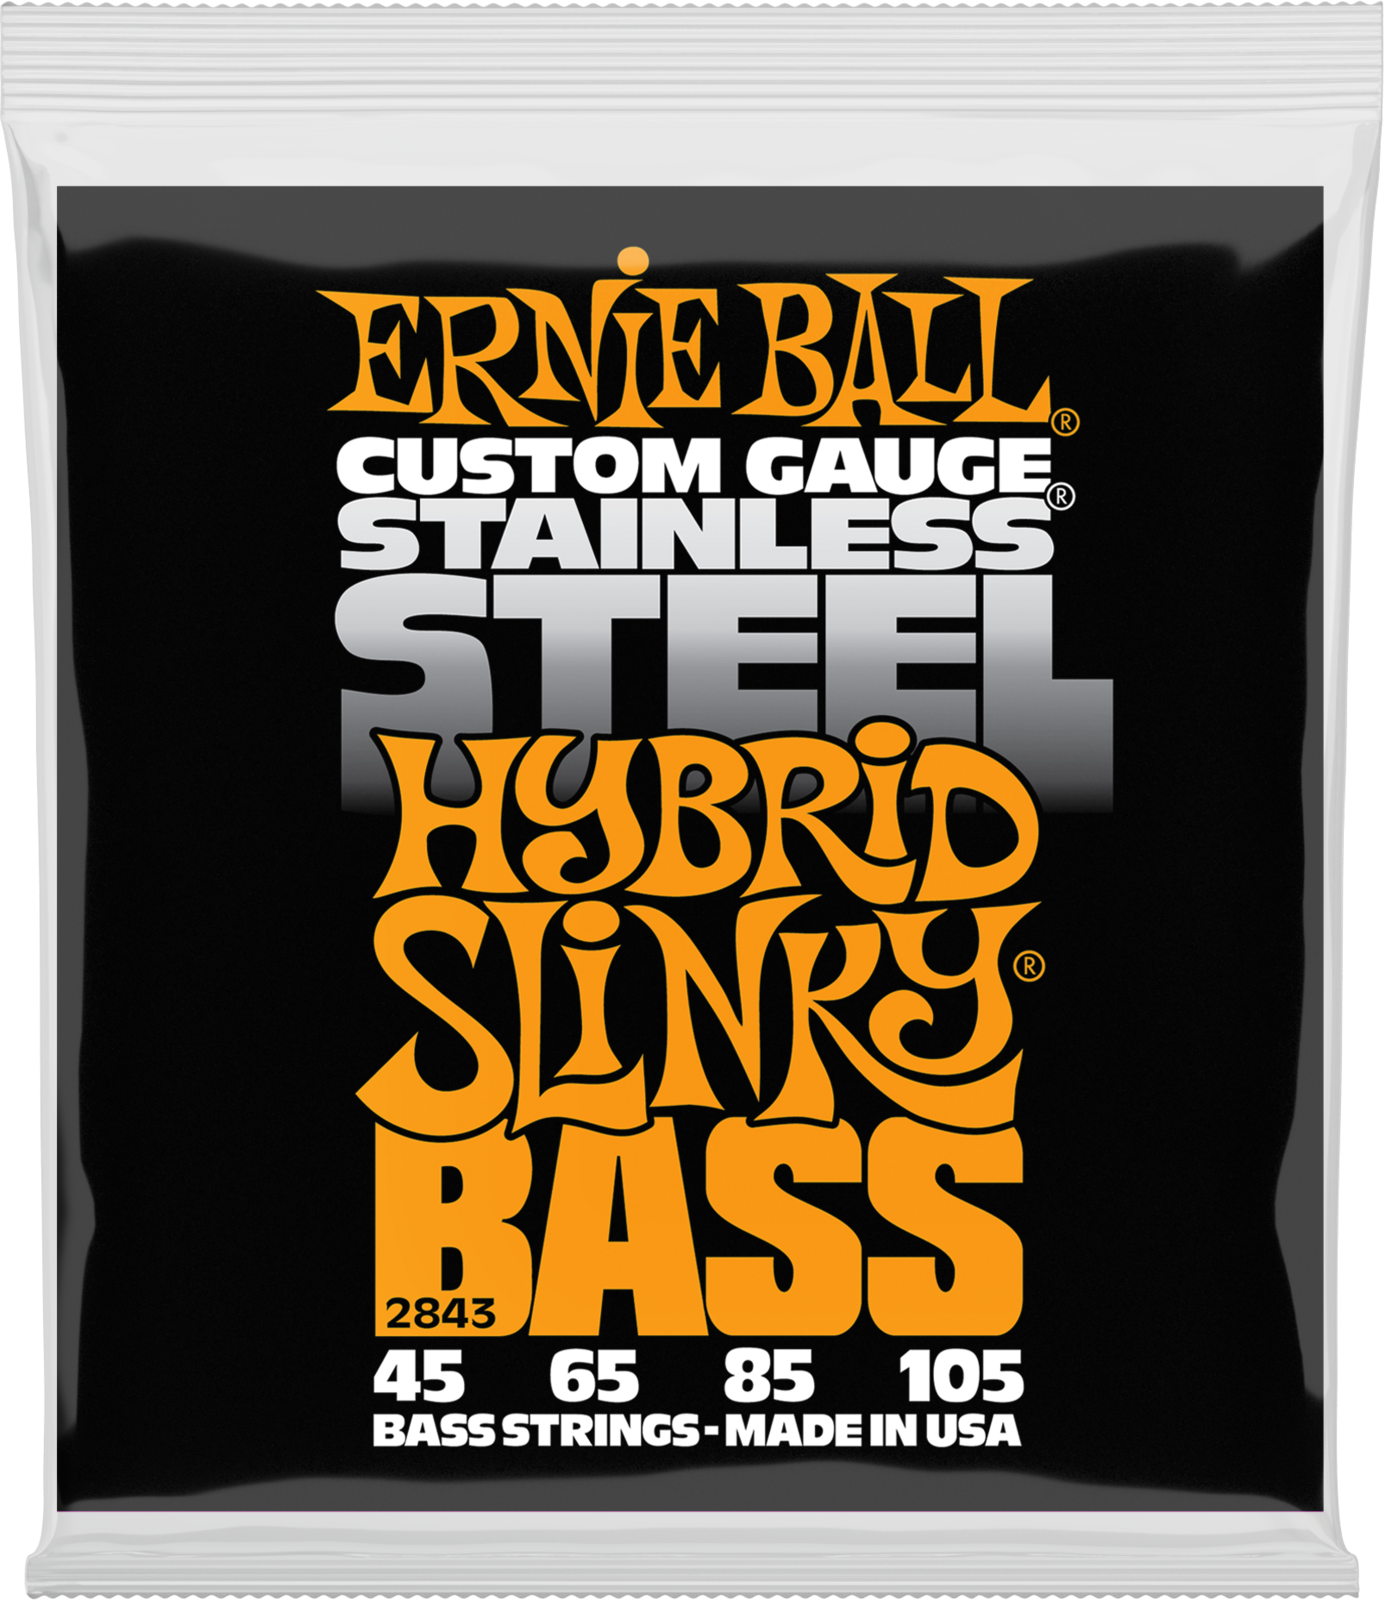 Ernie Ball 2843 Hybrid Slinky Bass